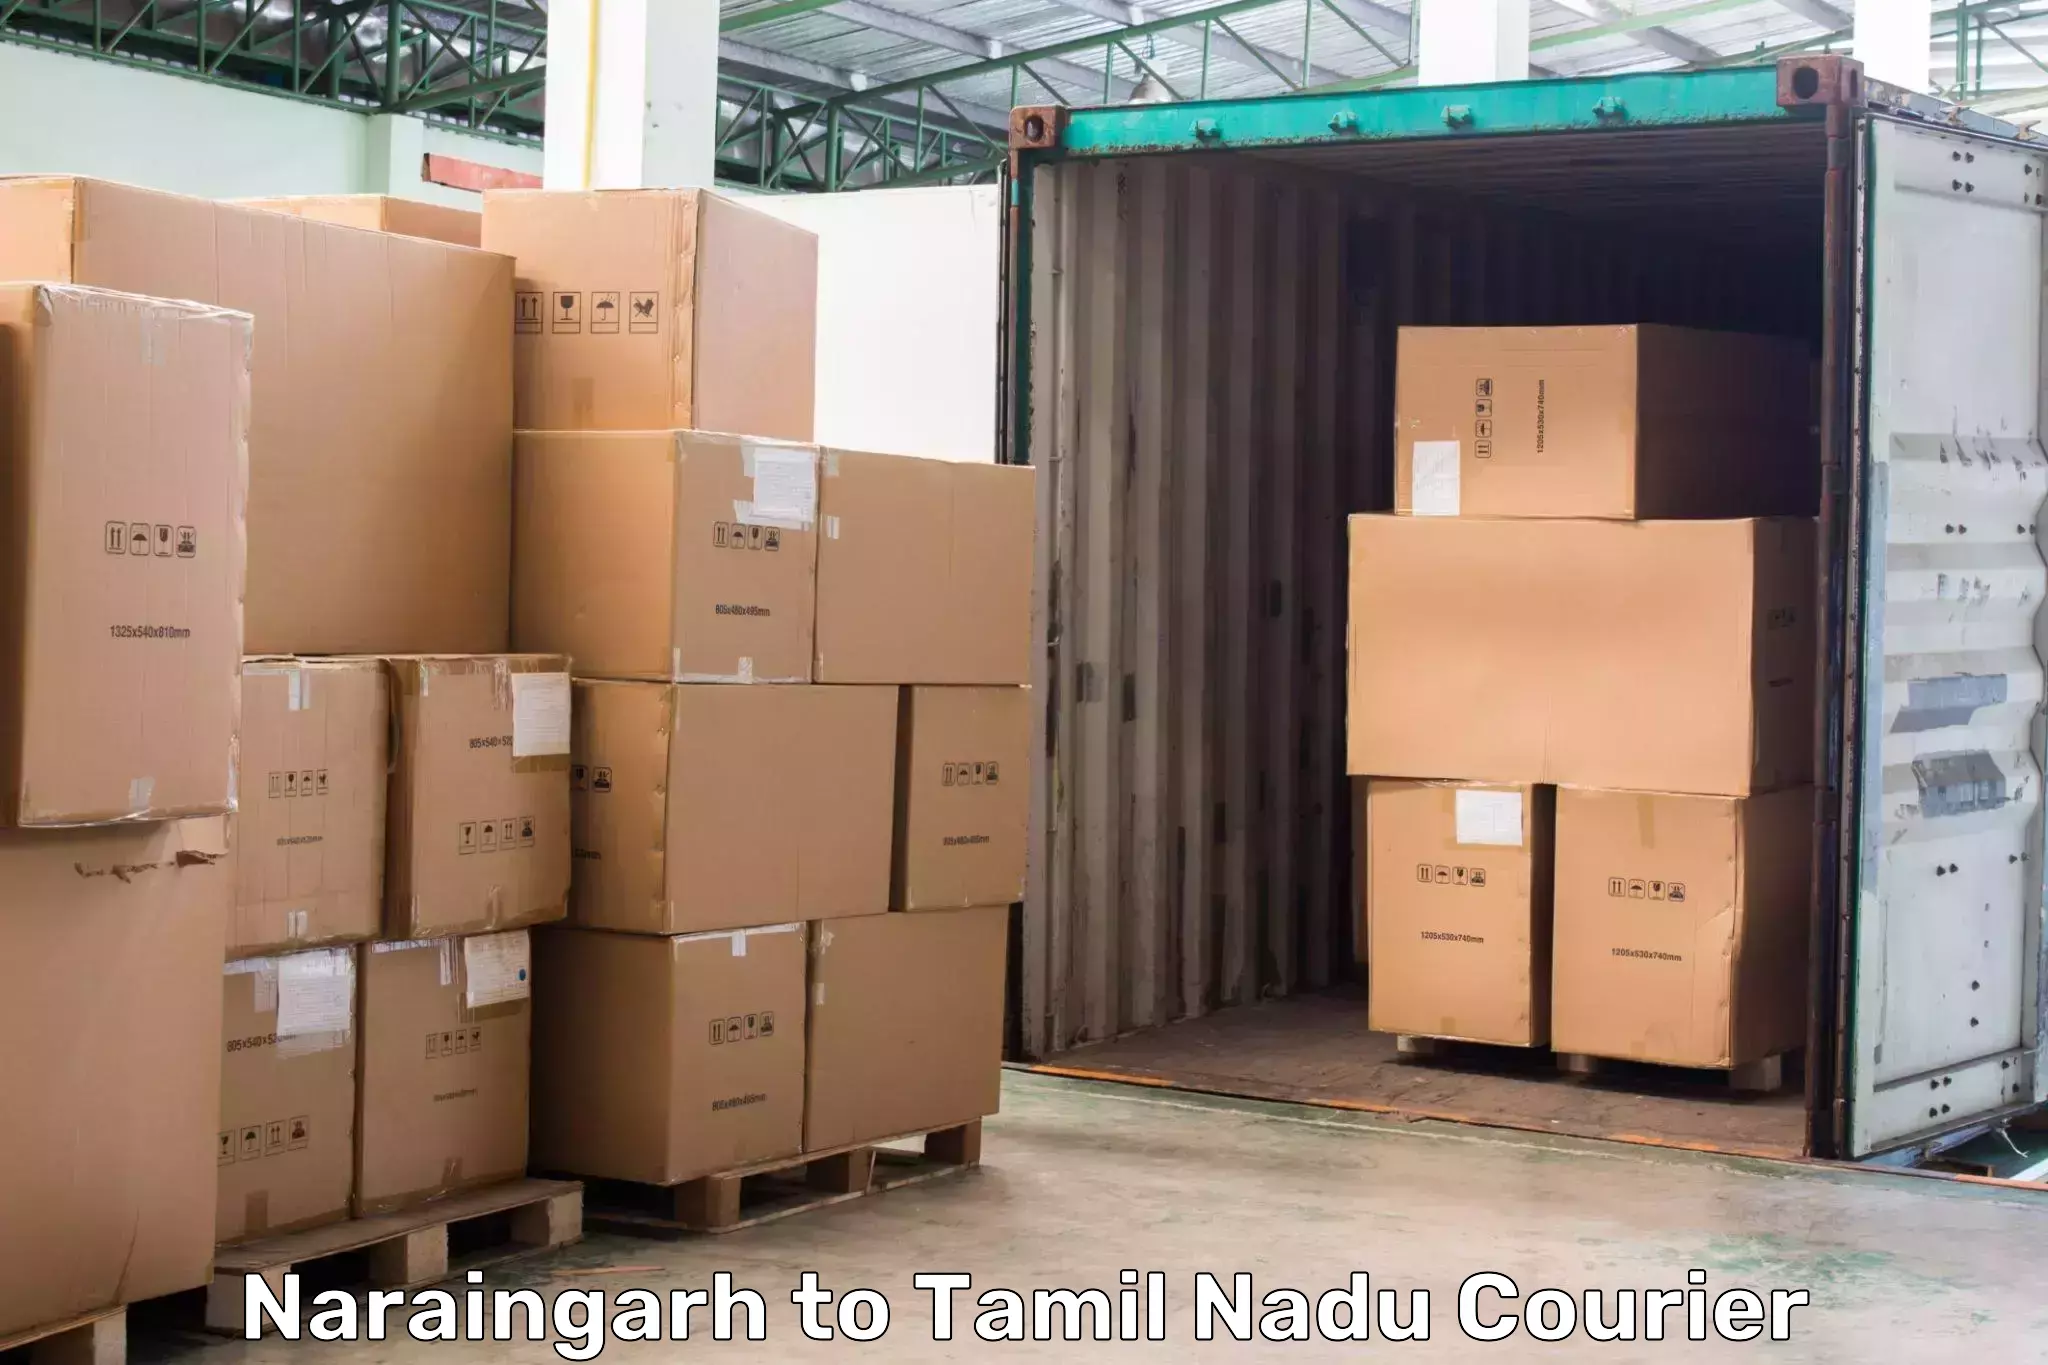 Courier service innovation Naraingarh to Palladam